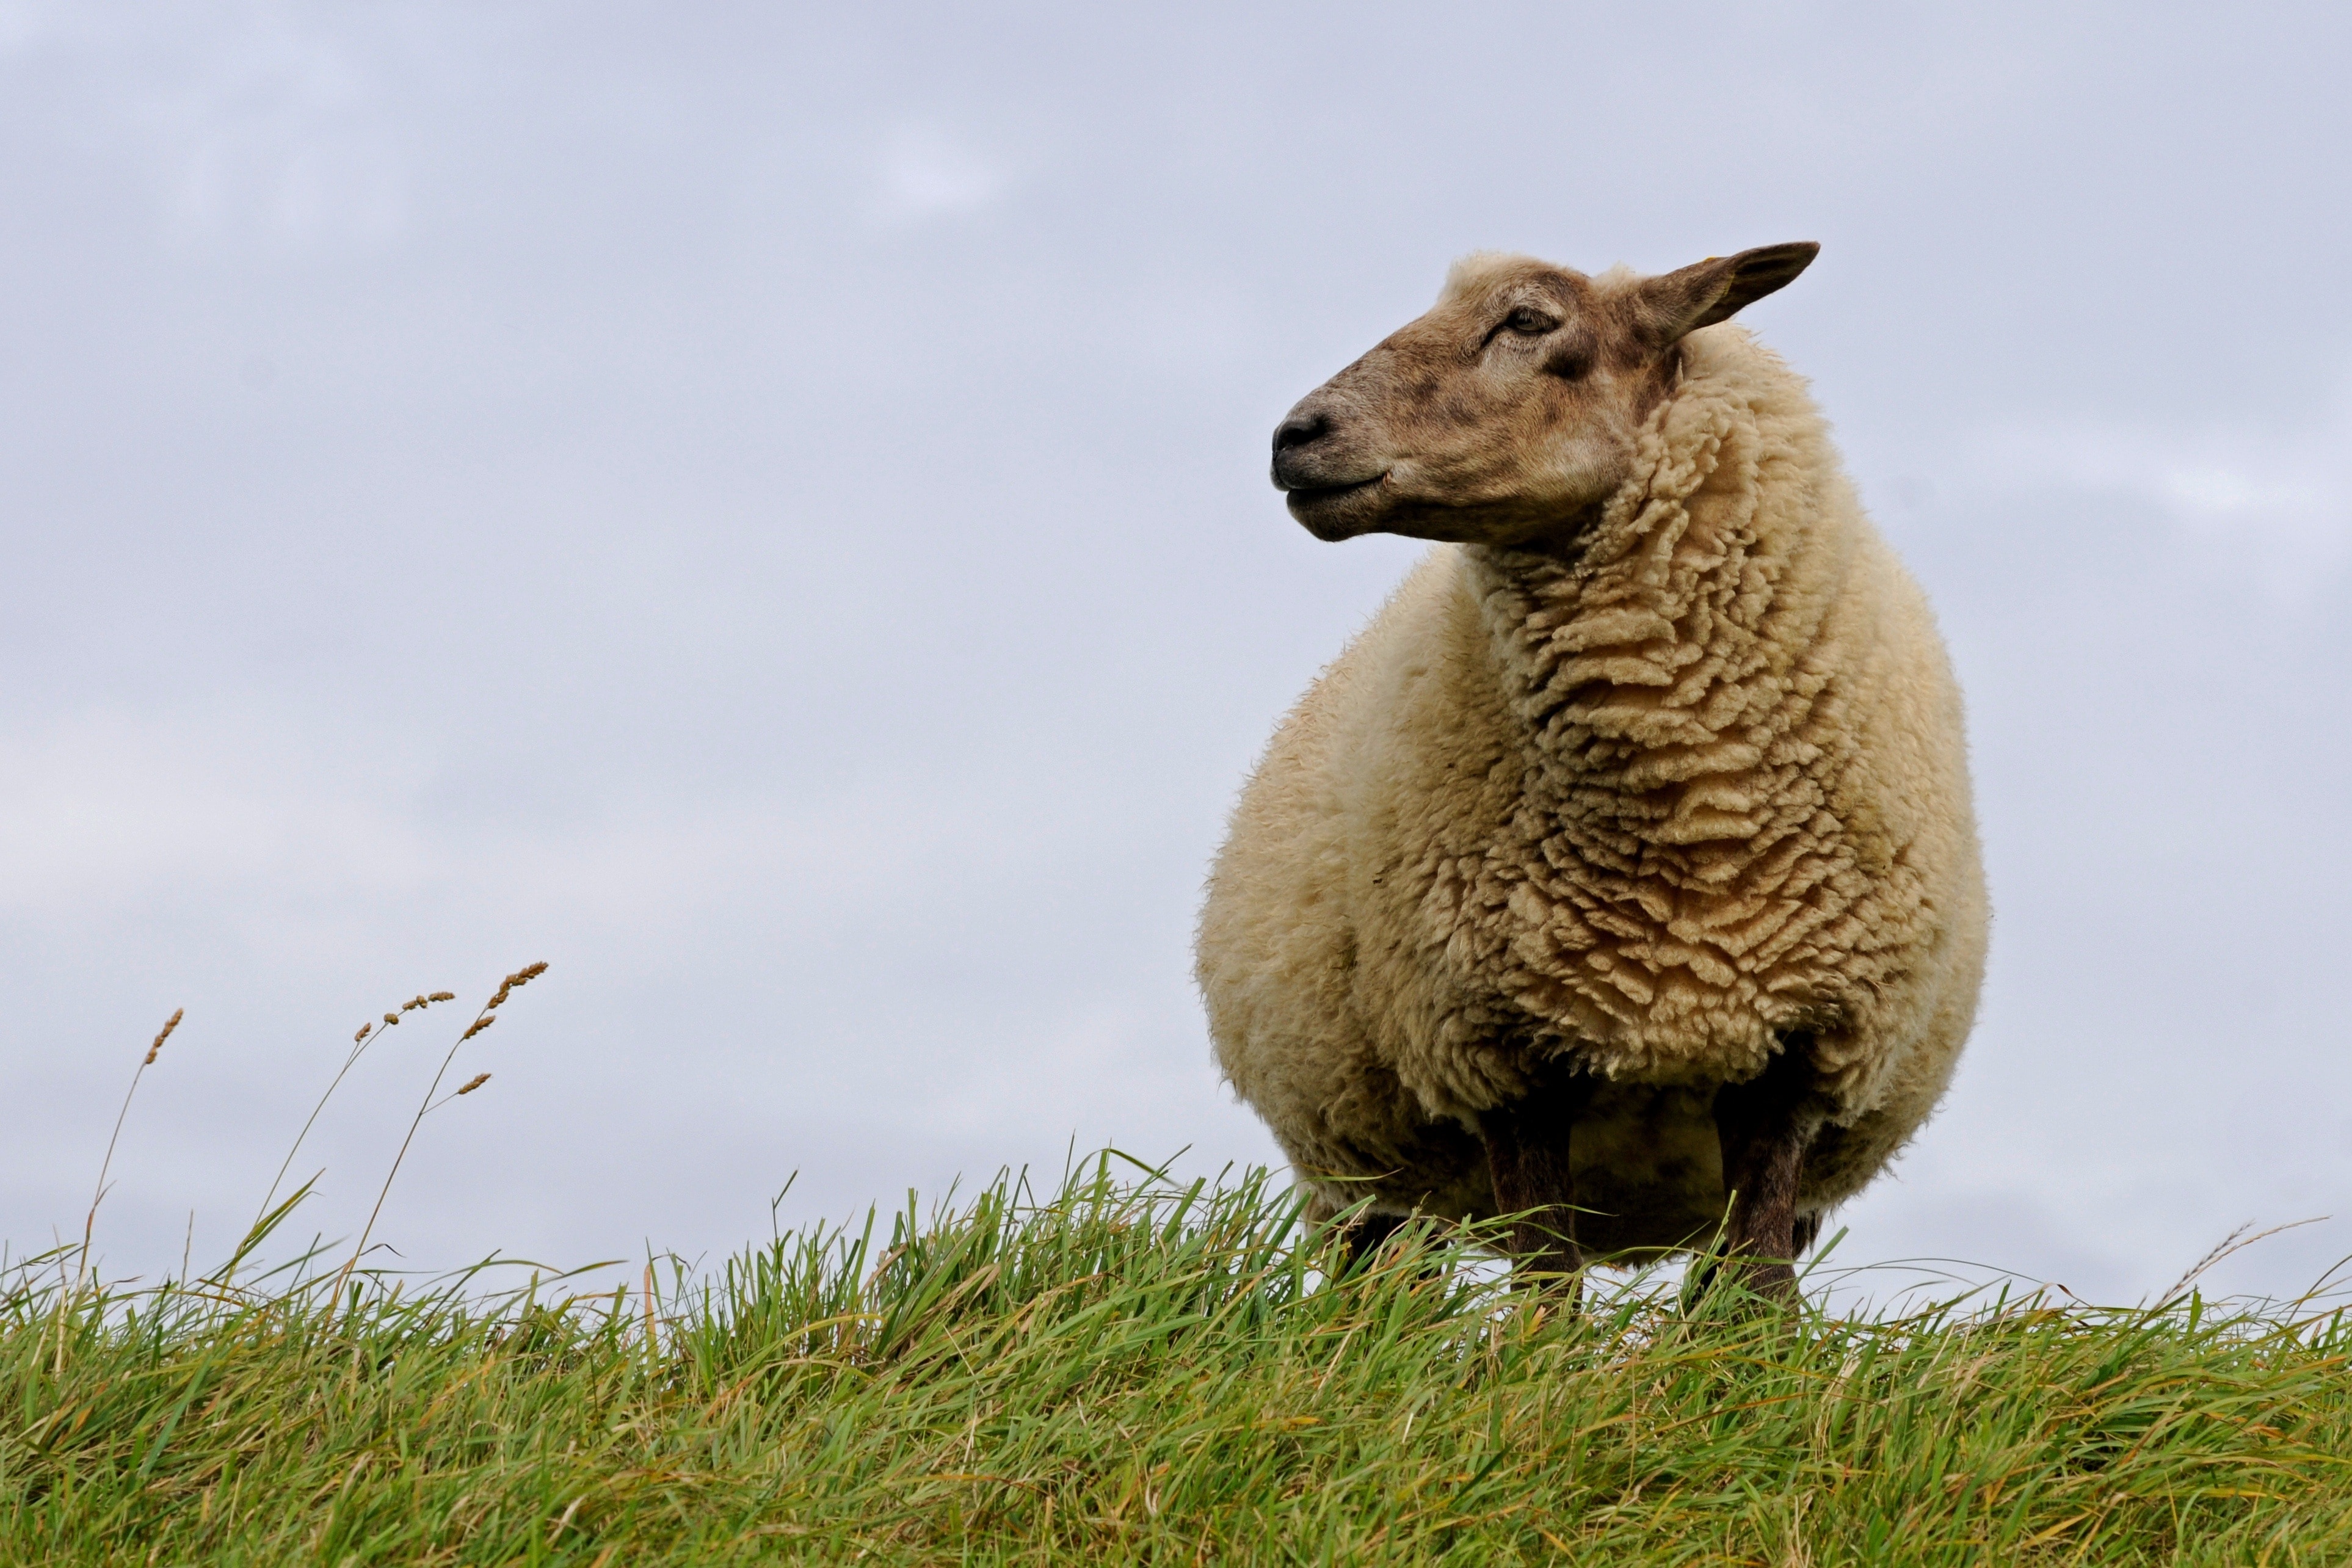 Curiosity, Deichschaf, North Sea, Sheep, grass, animal wildlife